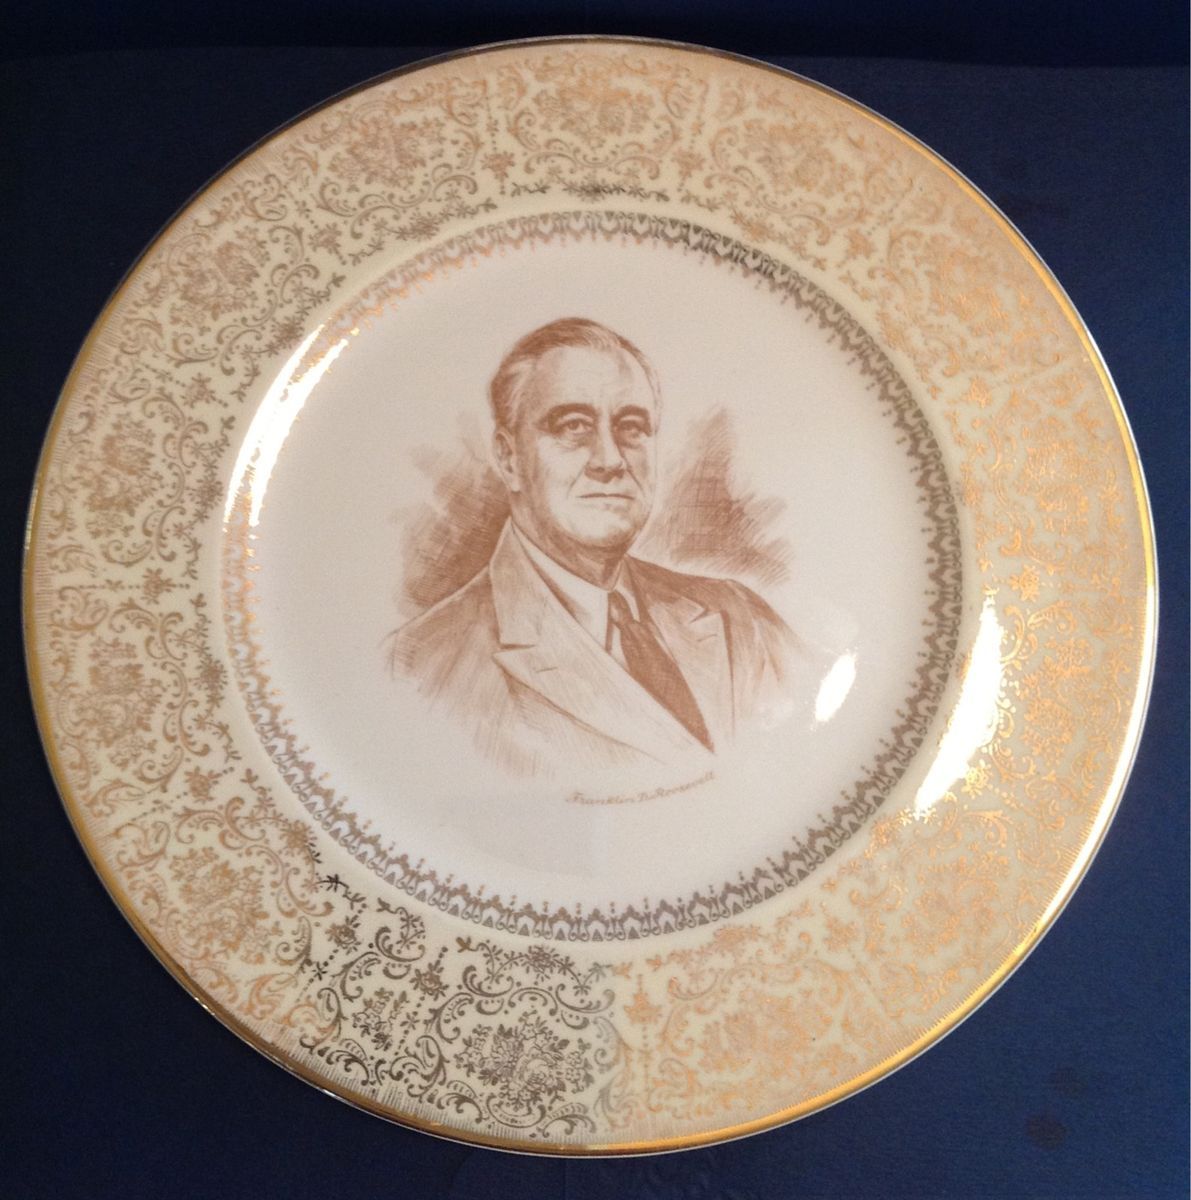  Service Plates by Salem China Company Franklin Delano Roosevelt